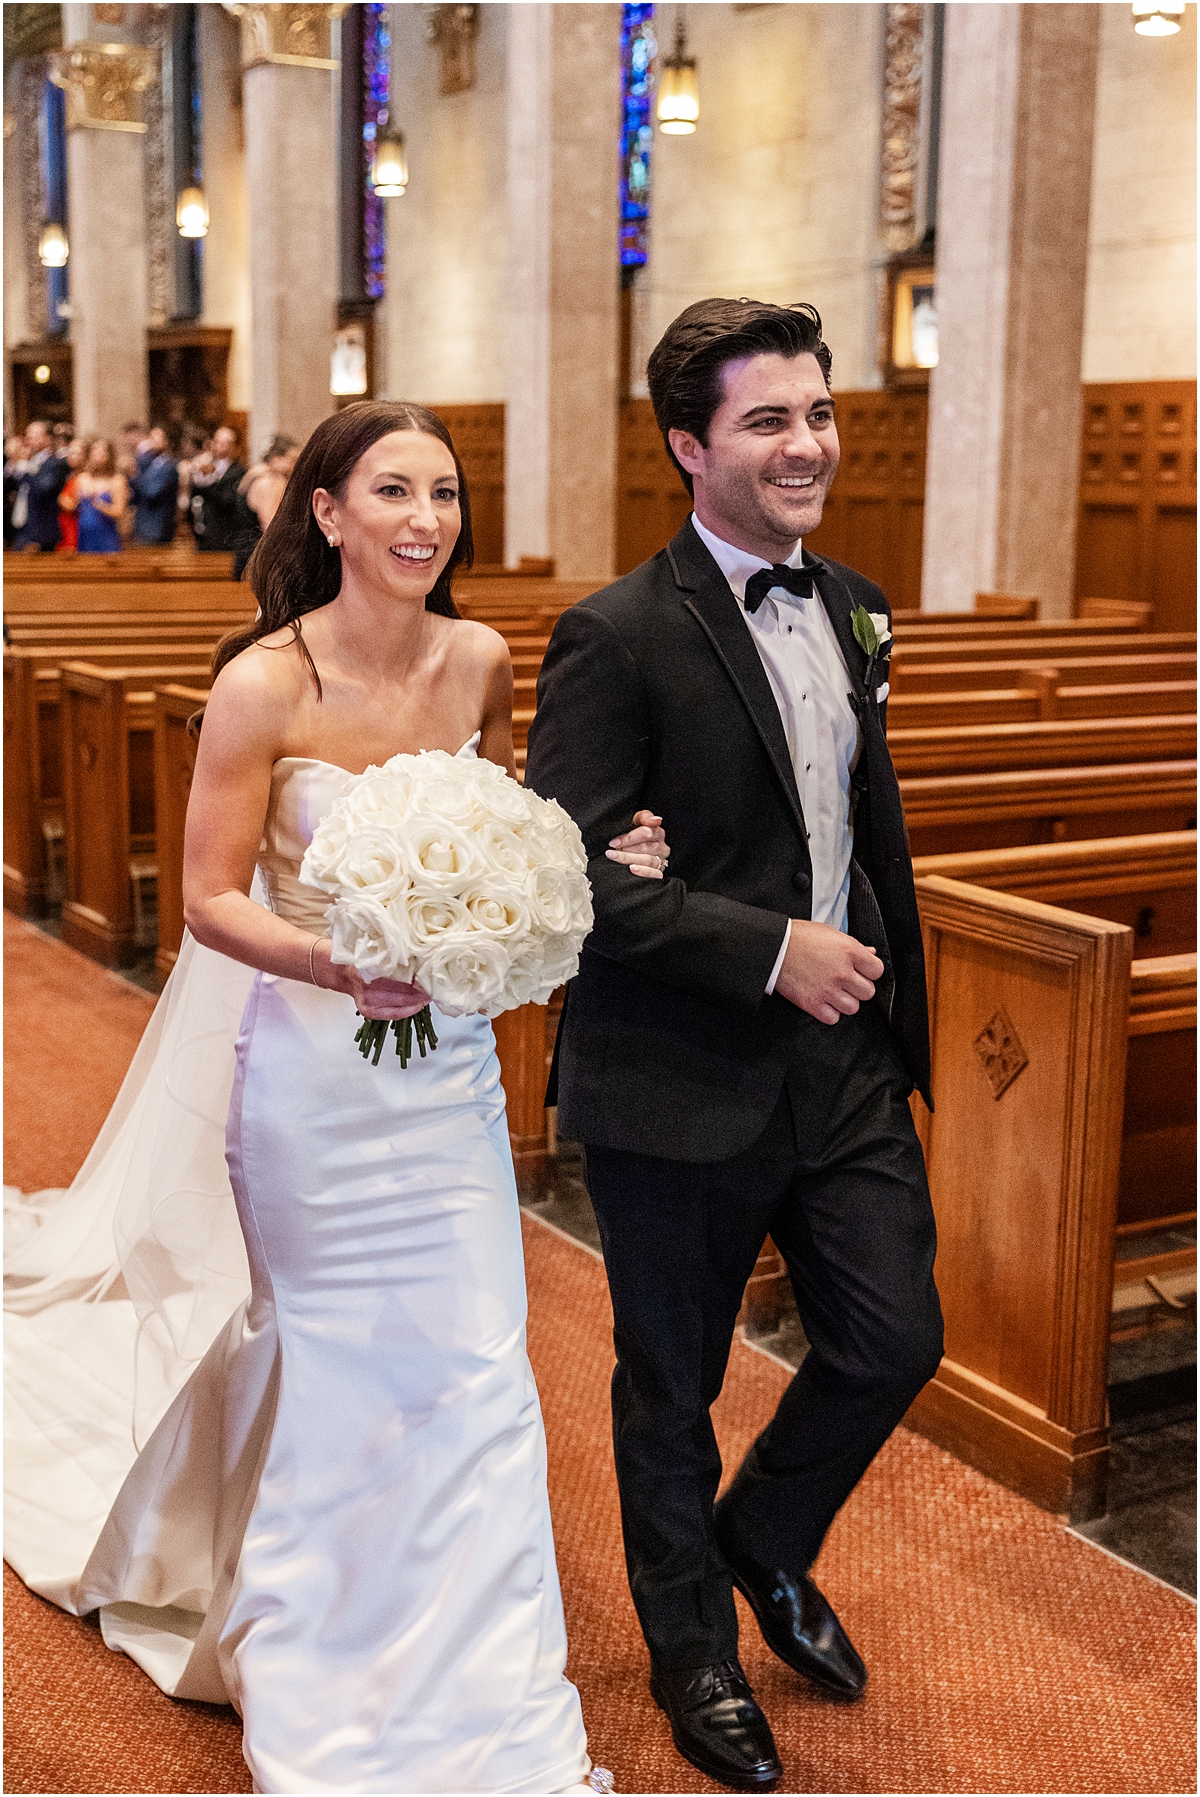 newlyweds exit church ceremony